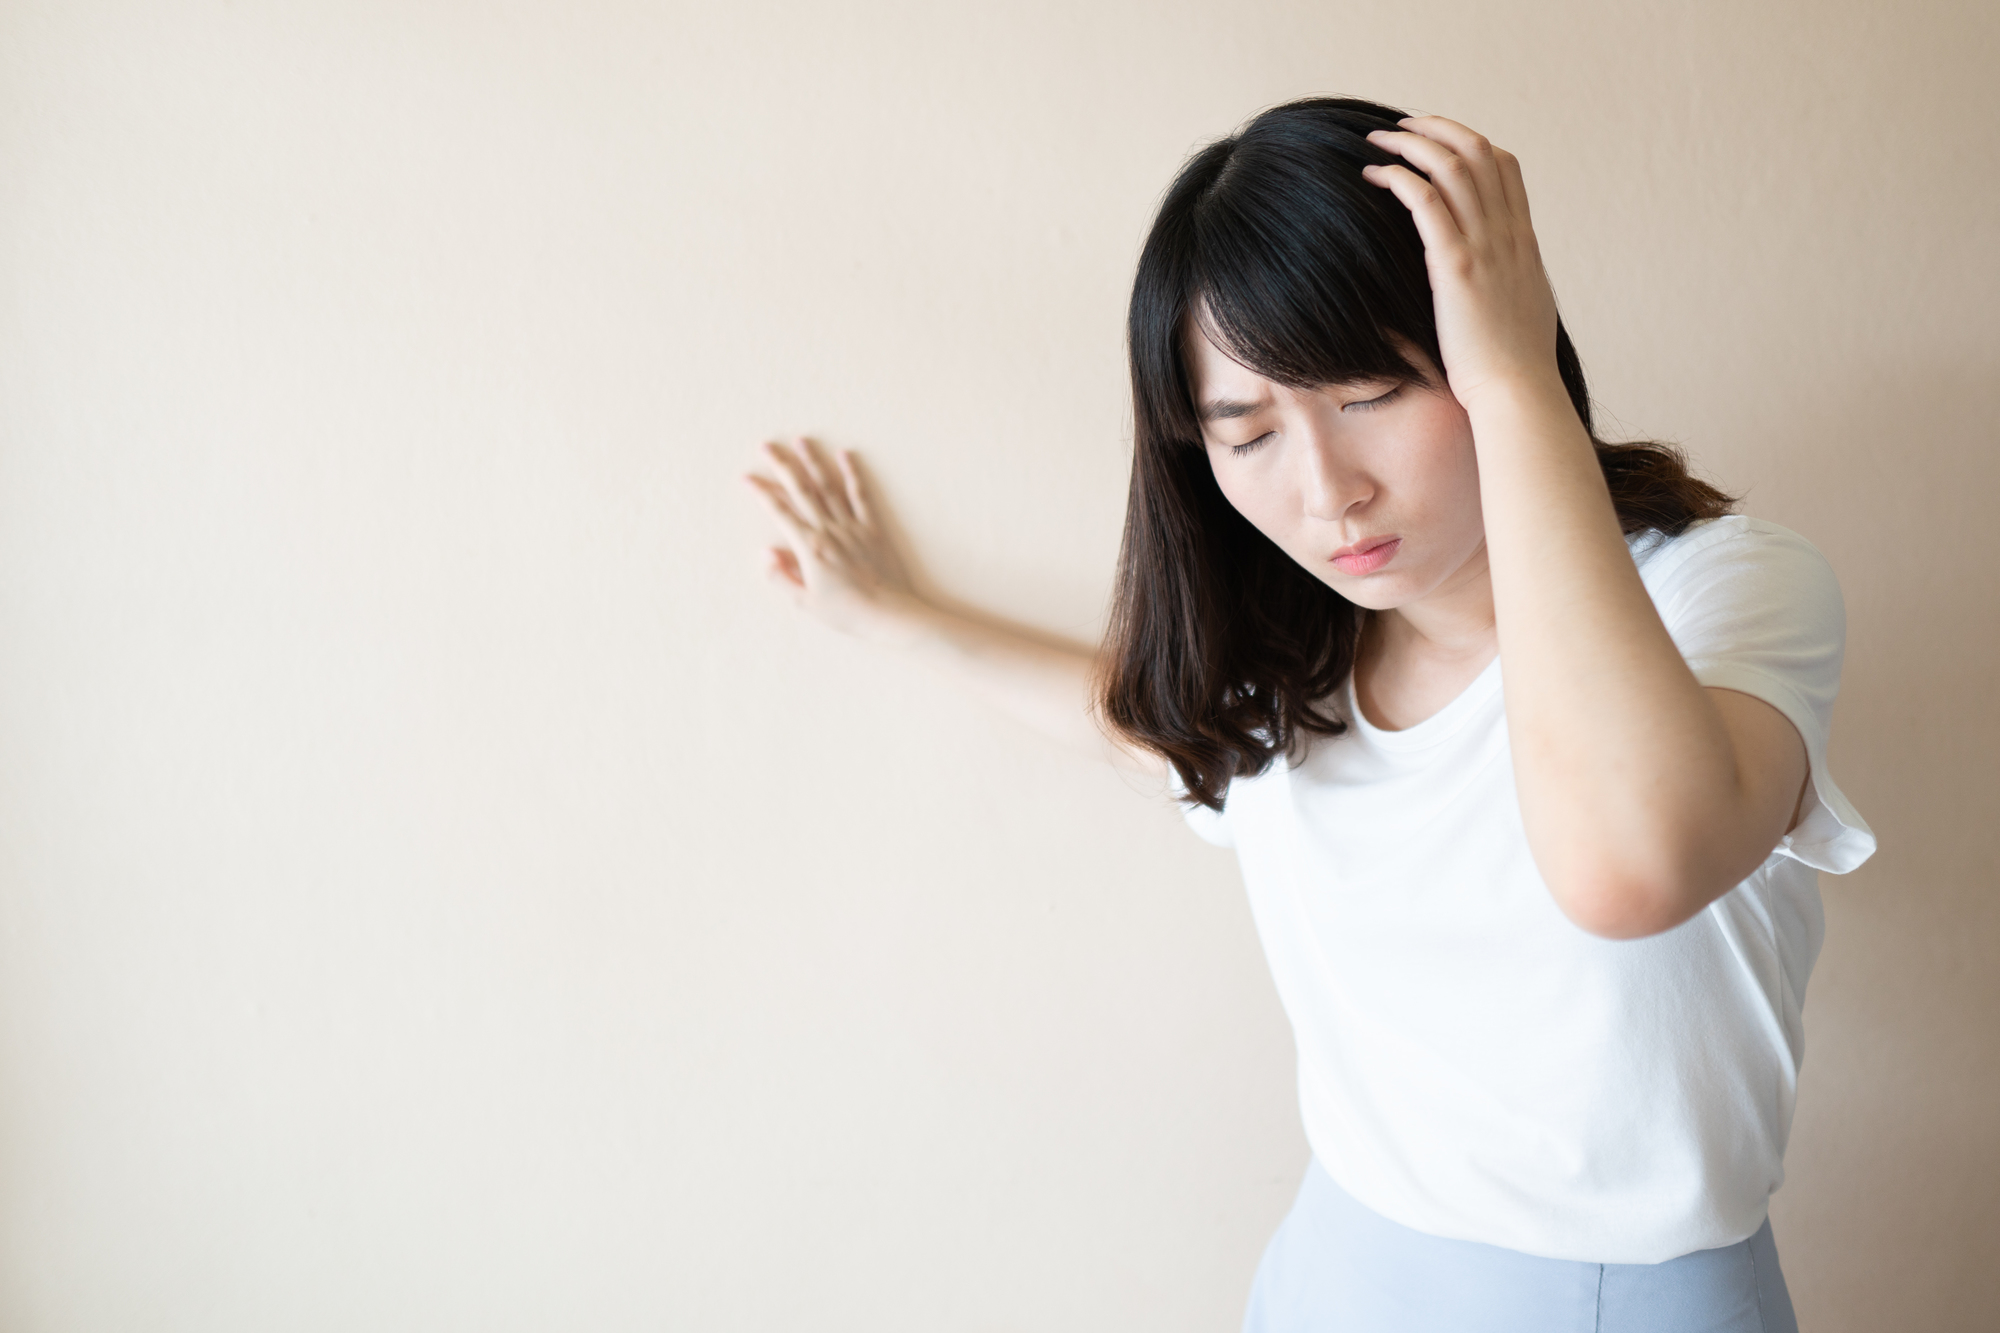  Young asian female suffering from dizziness, vertigo and headache over white background. Cause of dizzy inclued migraine, stress, stroke, BPPV, Meniere’s disease or brain tumor. Health care problem.